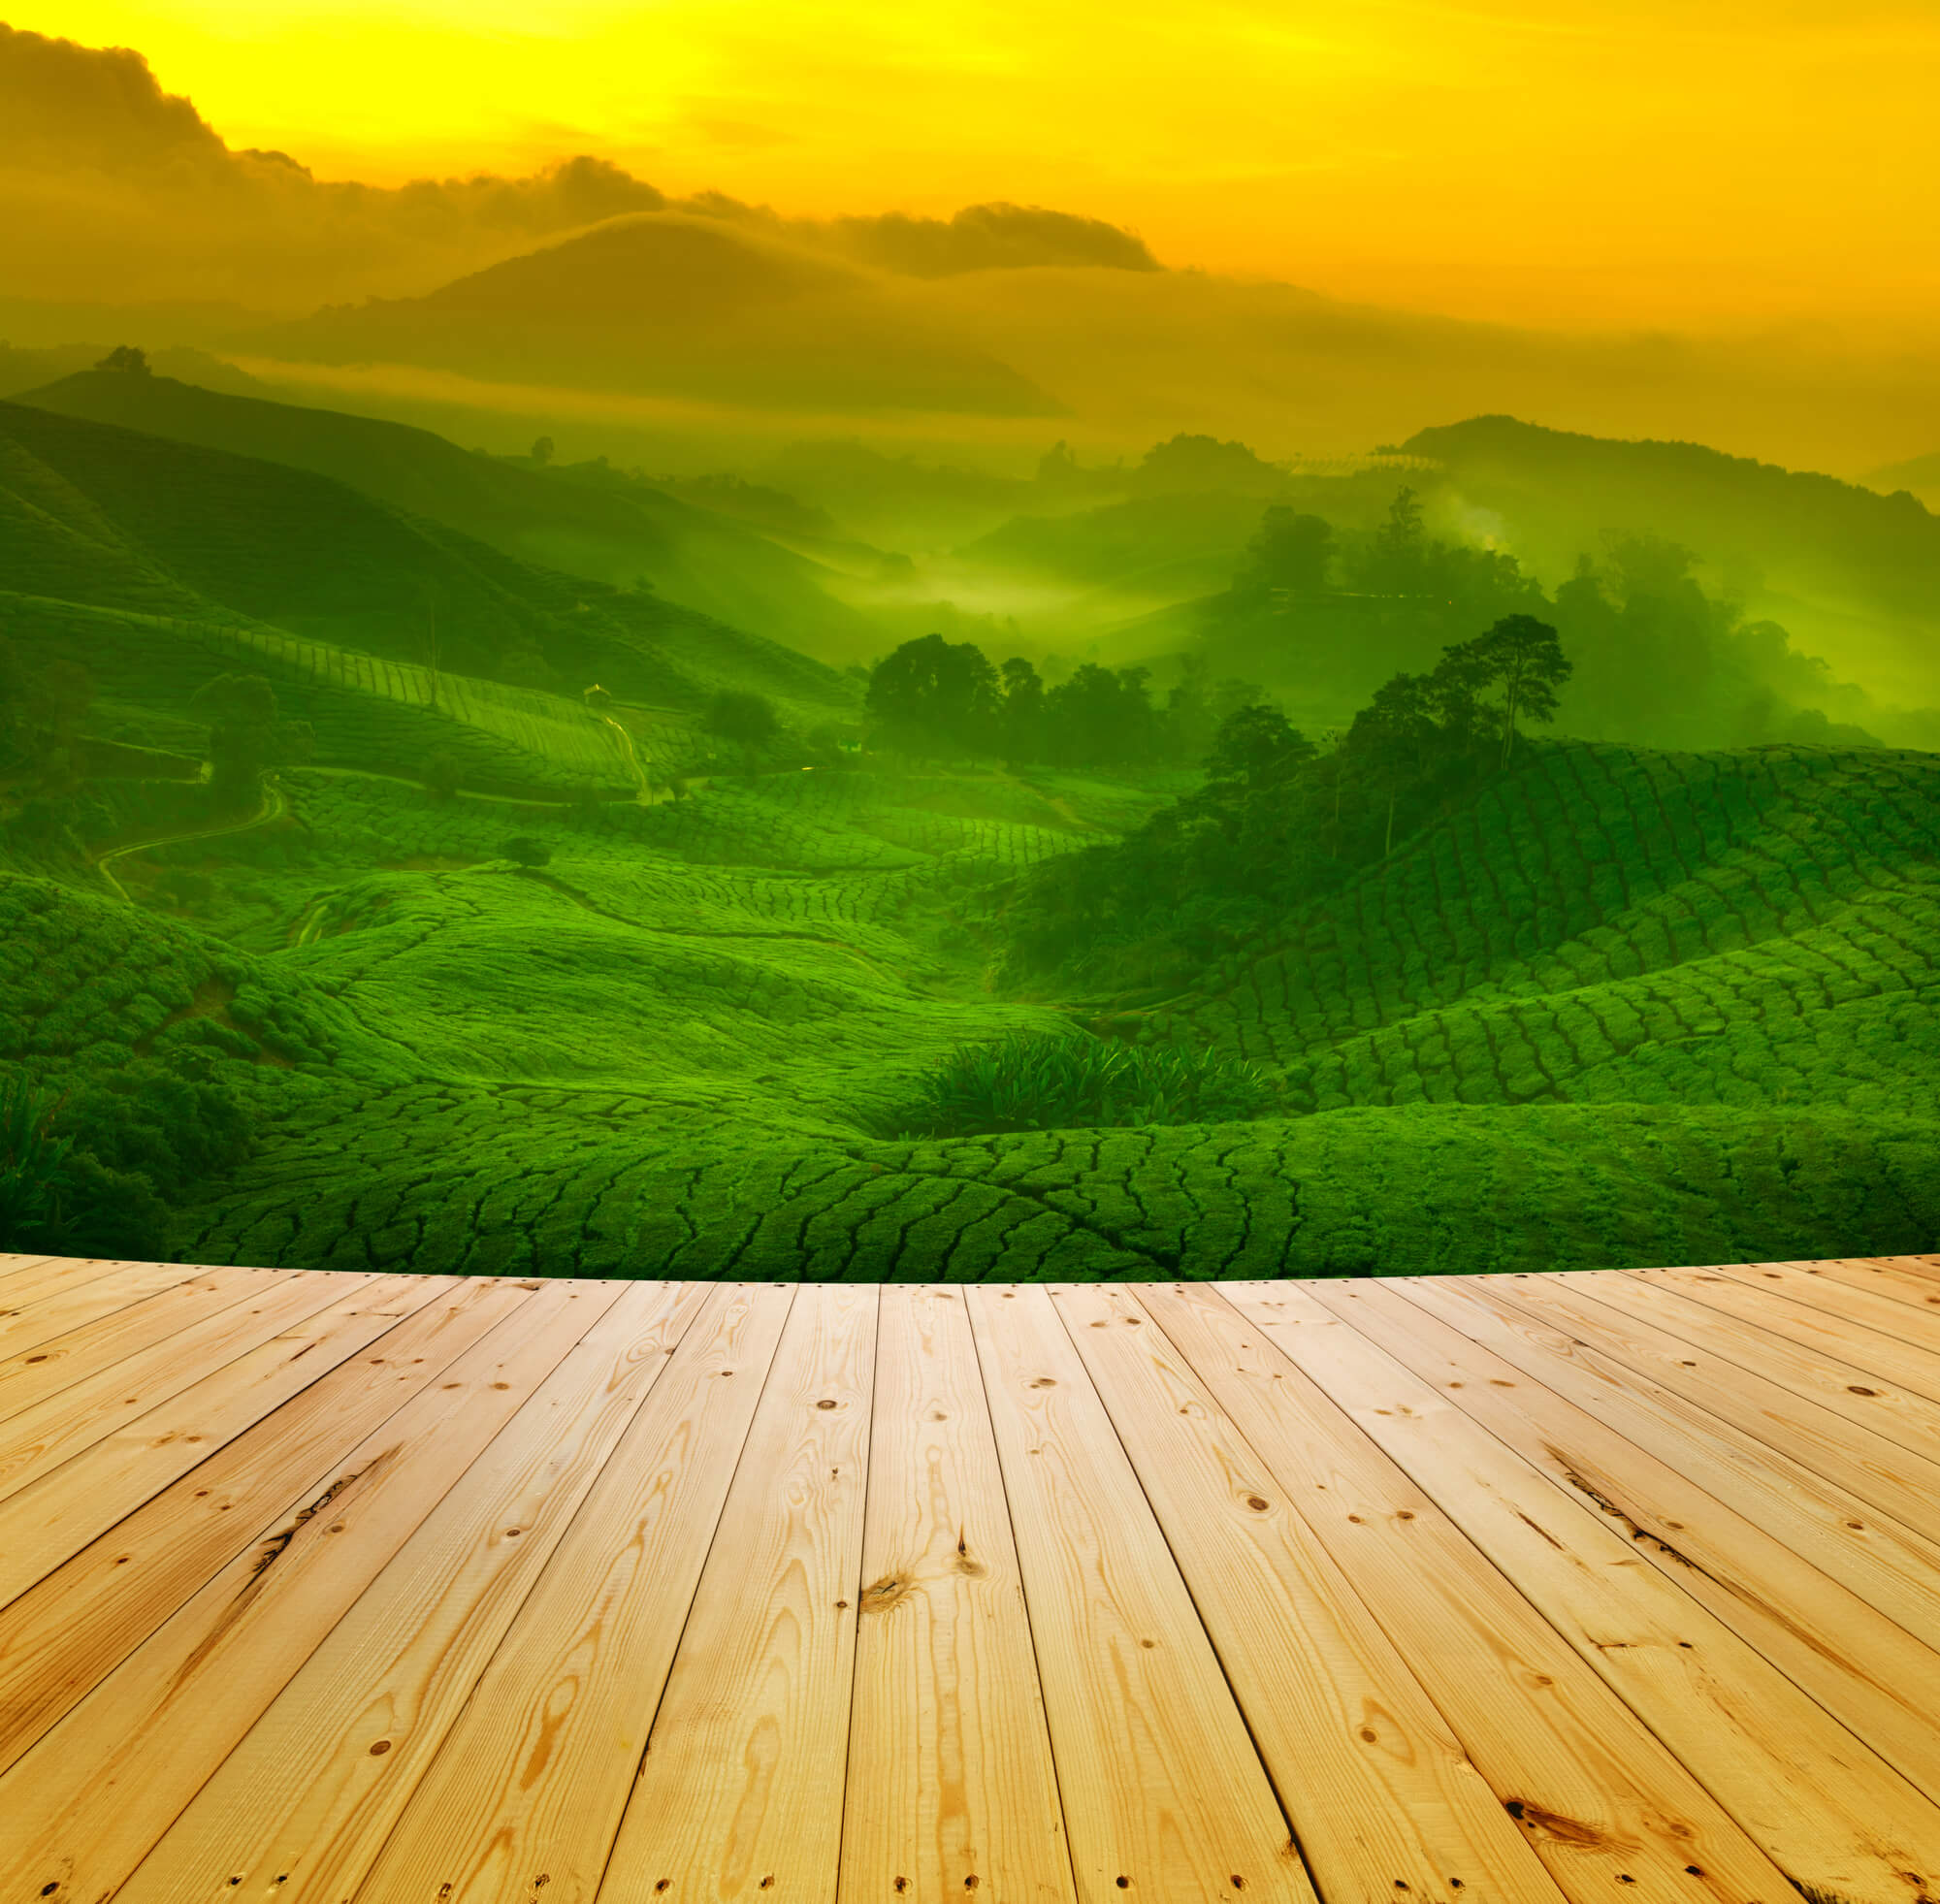 Tea plantations in India. Processed photo. Illustration: depositphotos.com